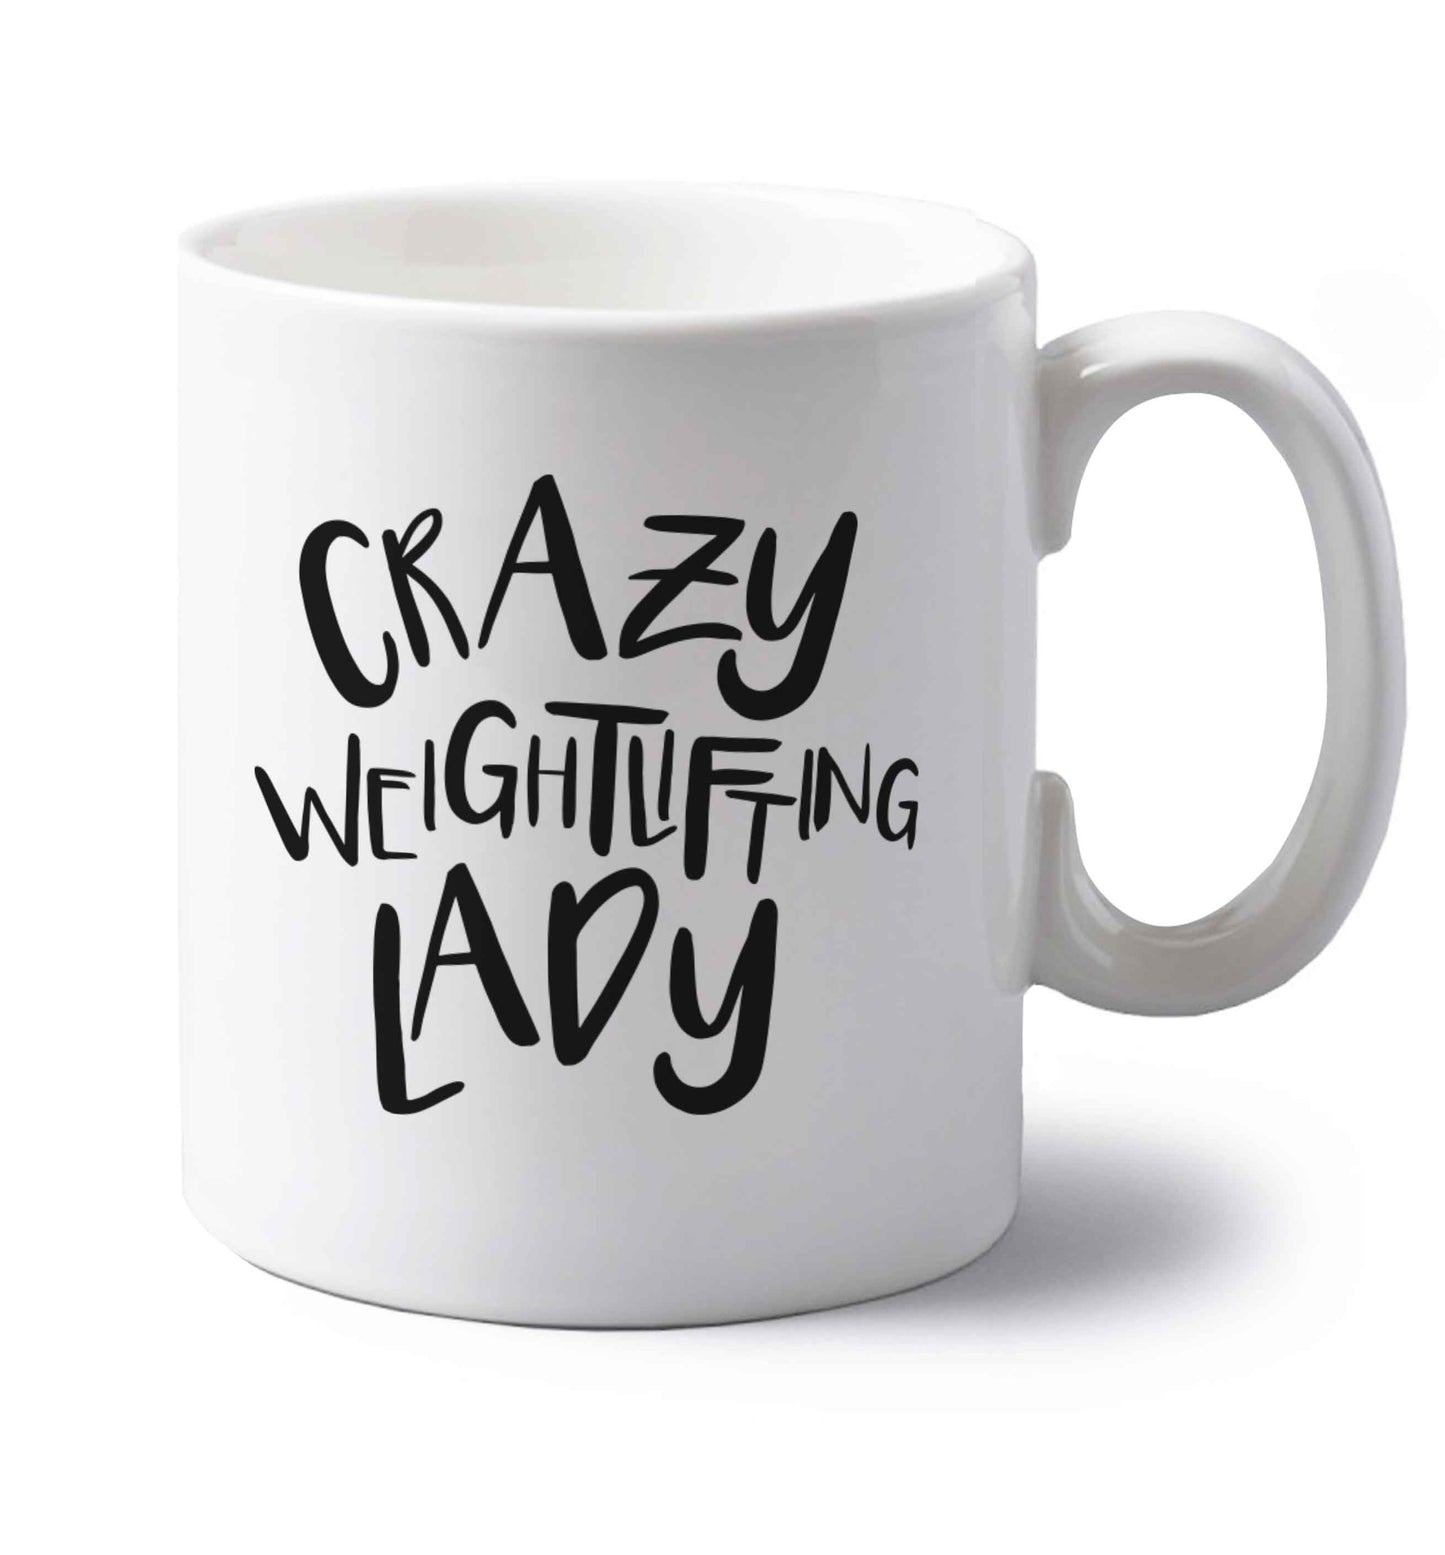 Crazy weightlifting lady left handed white ceramic mug 